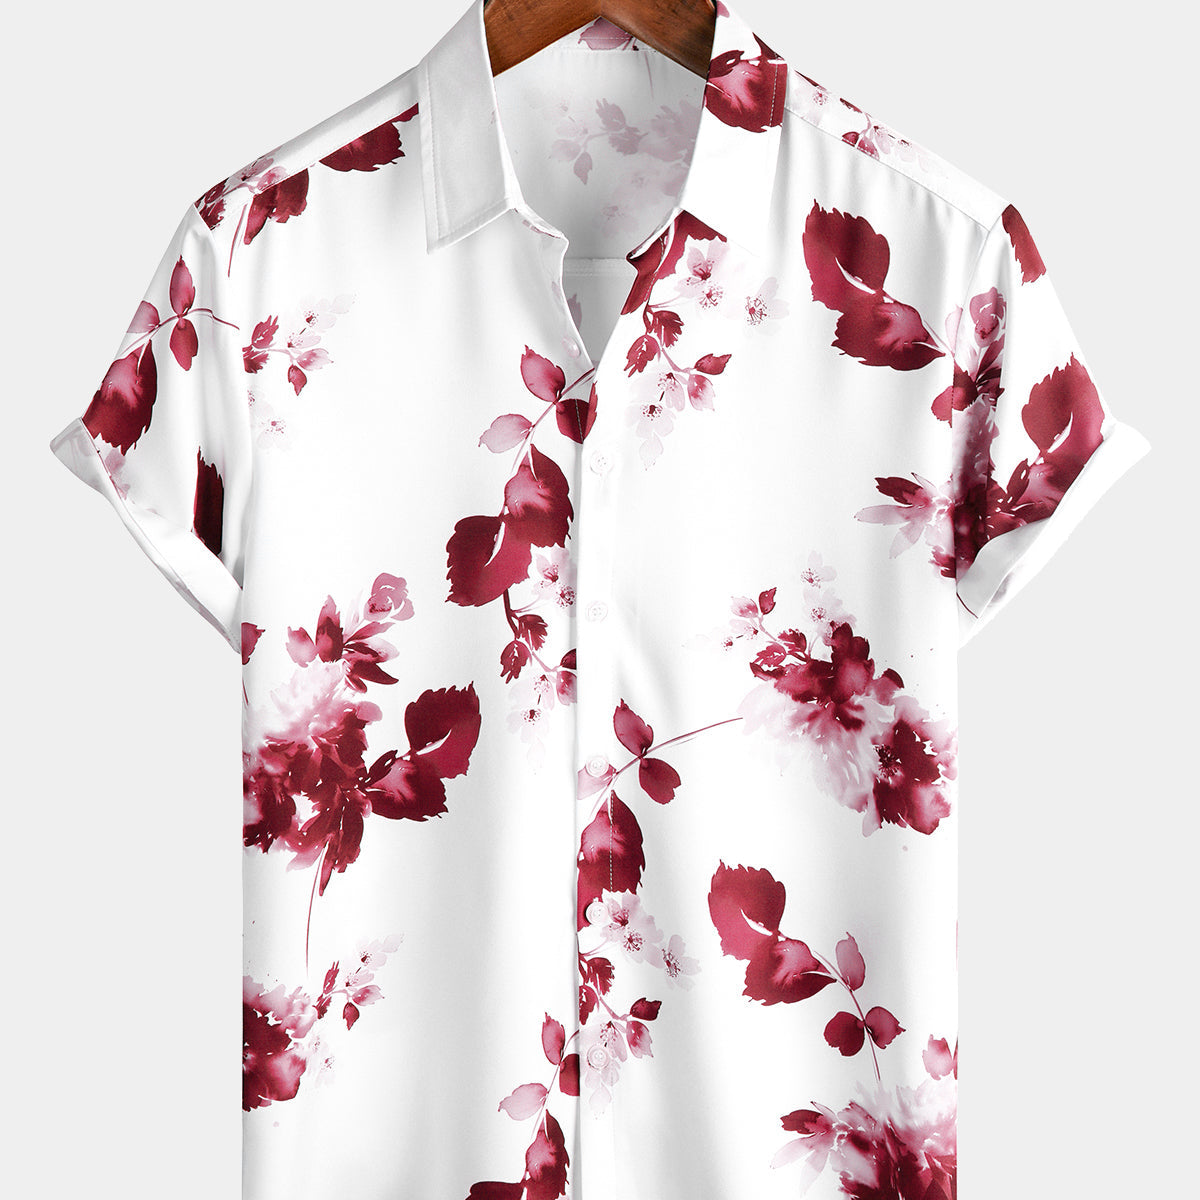 Men's Casual Red Floral Art Button Up Short Sleeve Summer Holiday Beach Shirt